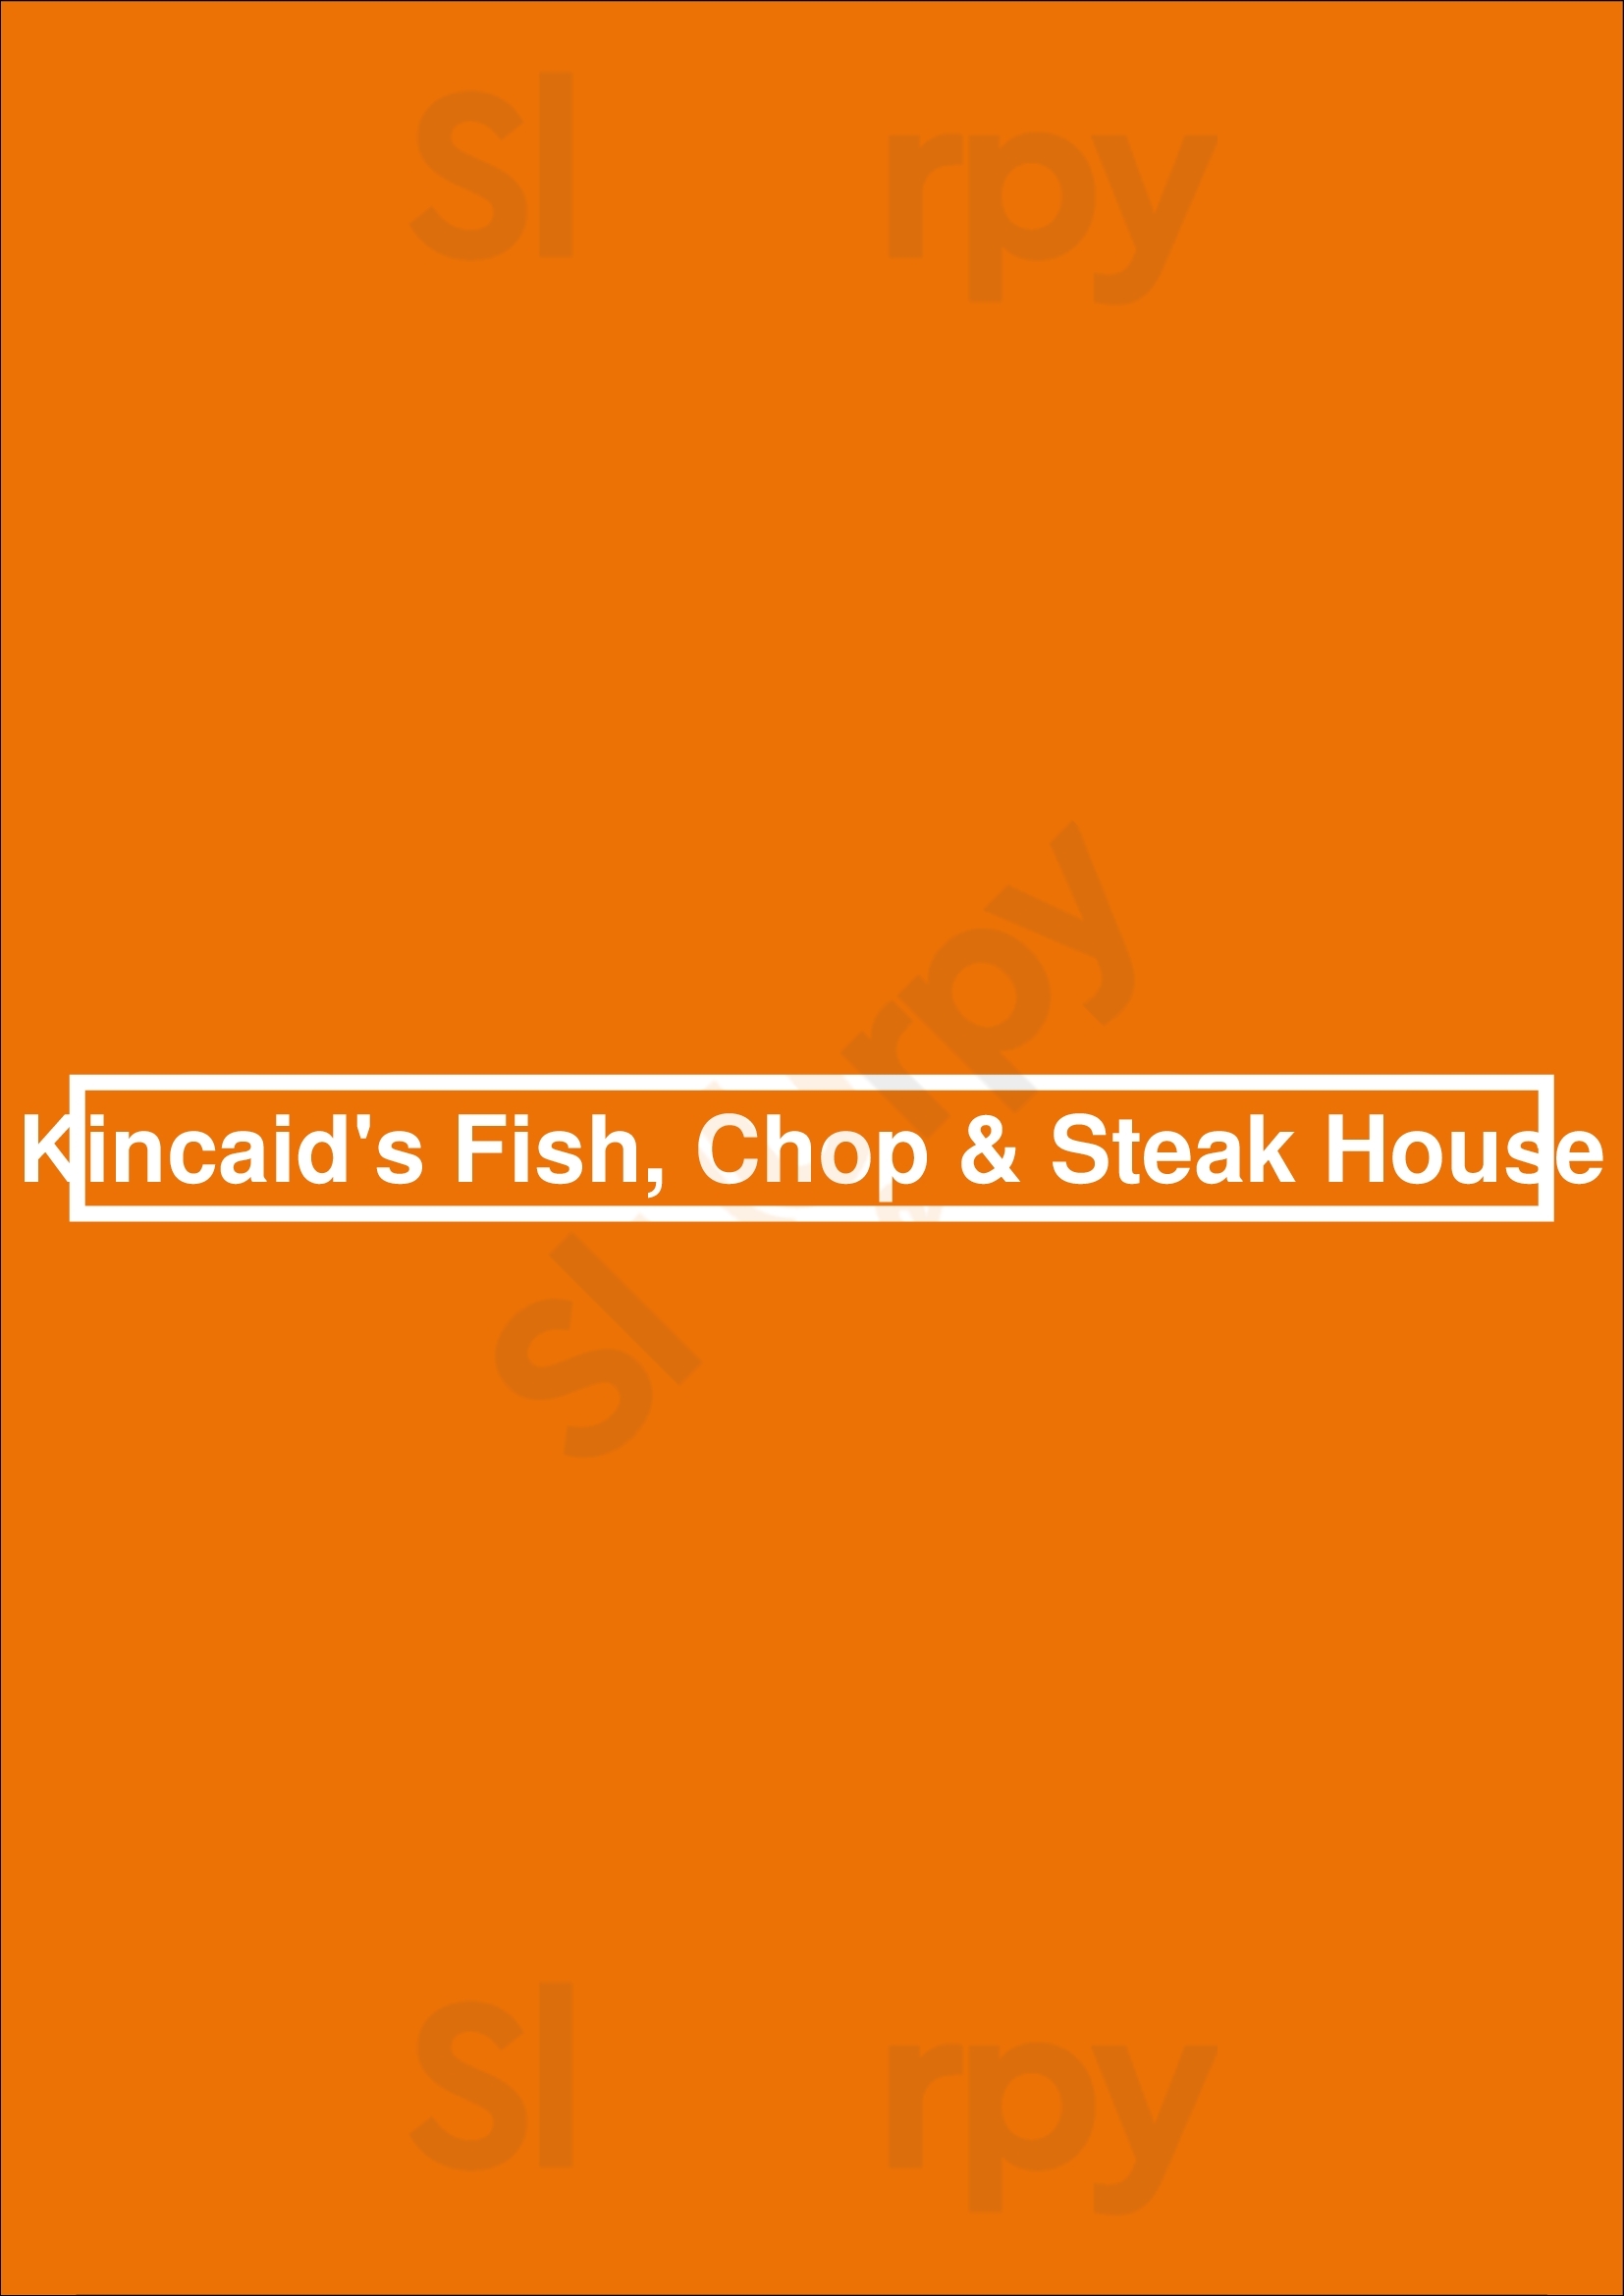 Kincaid's Fish, Chop & Steakhouse Saint Paul Menu - 1